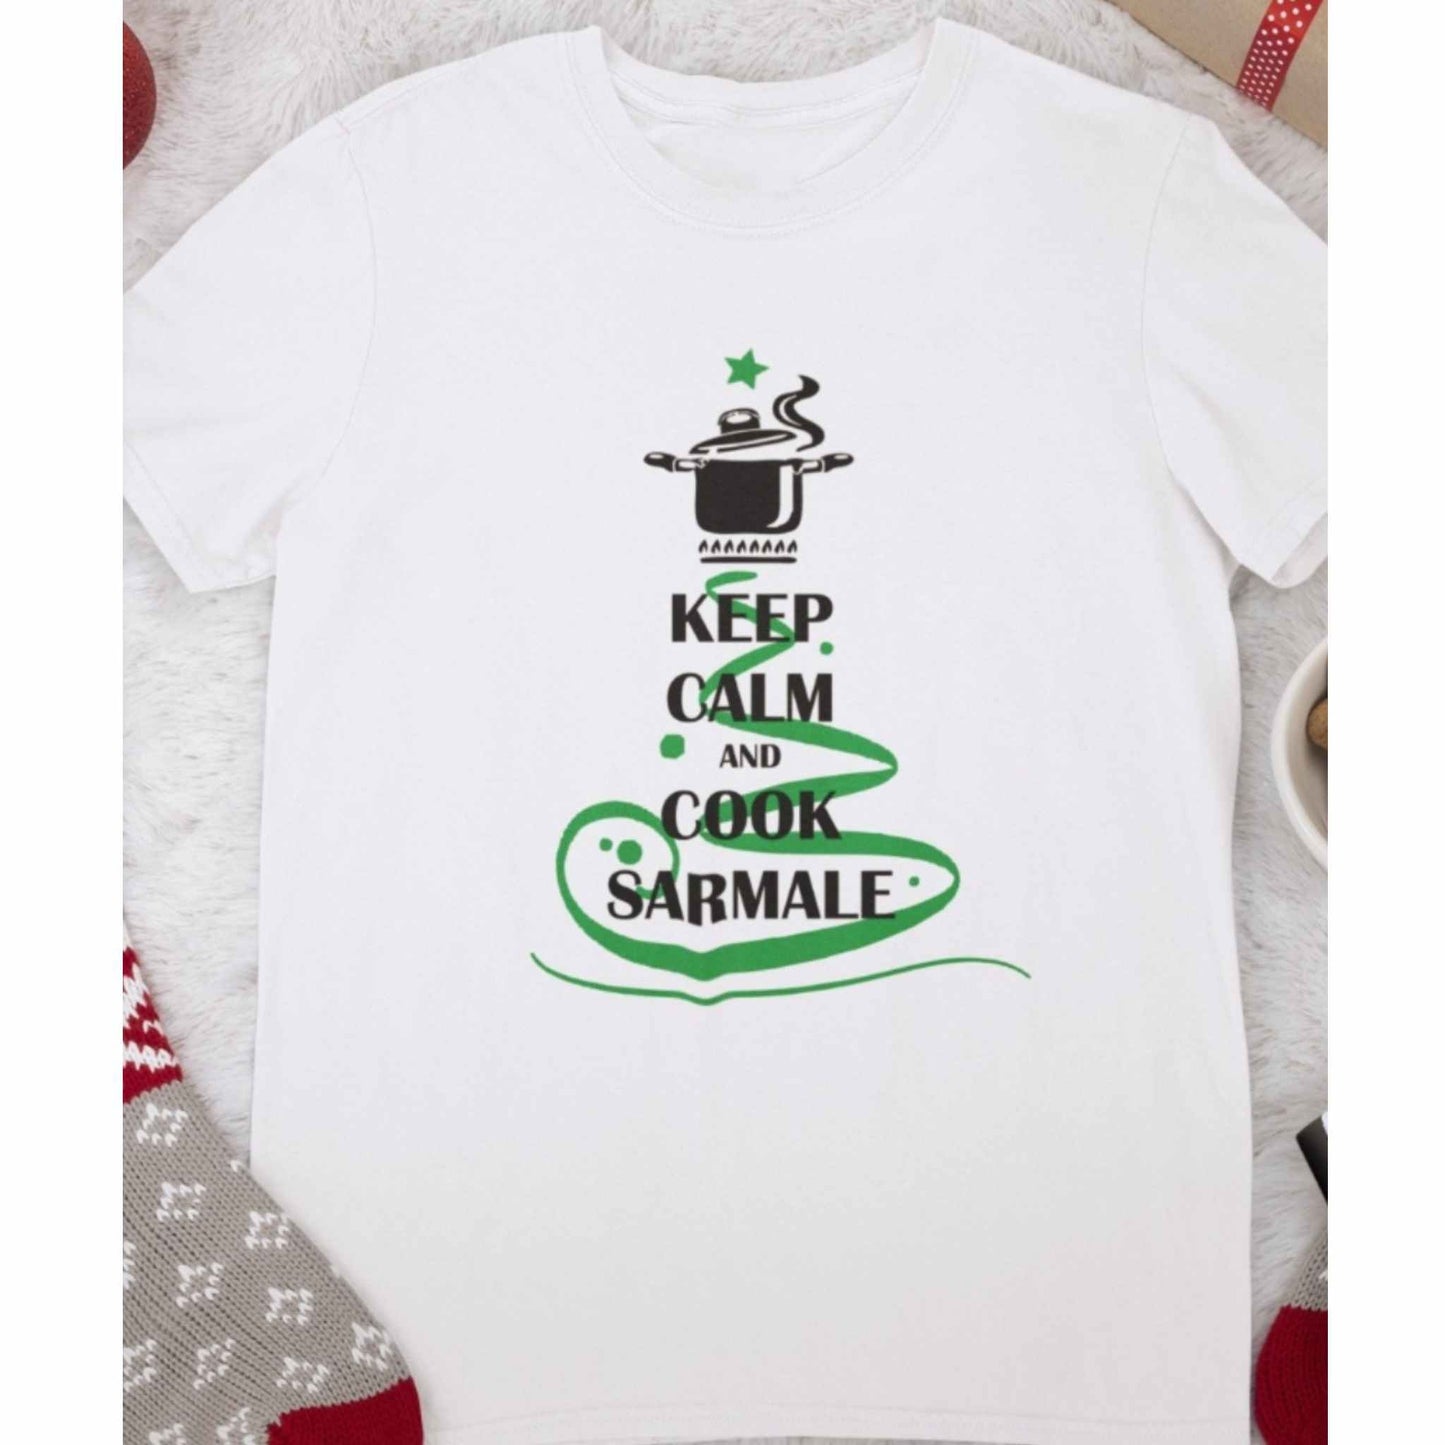 Tricou de Craciun alb, personalizat cu text amuzant "Keep calm and cook sarmale", 100% bumbac.